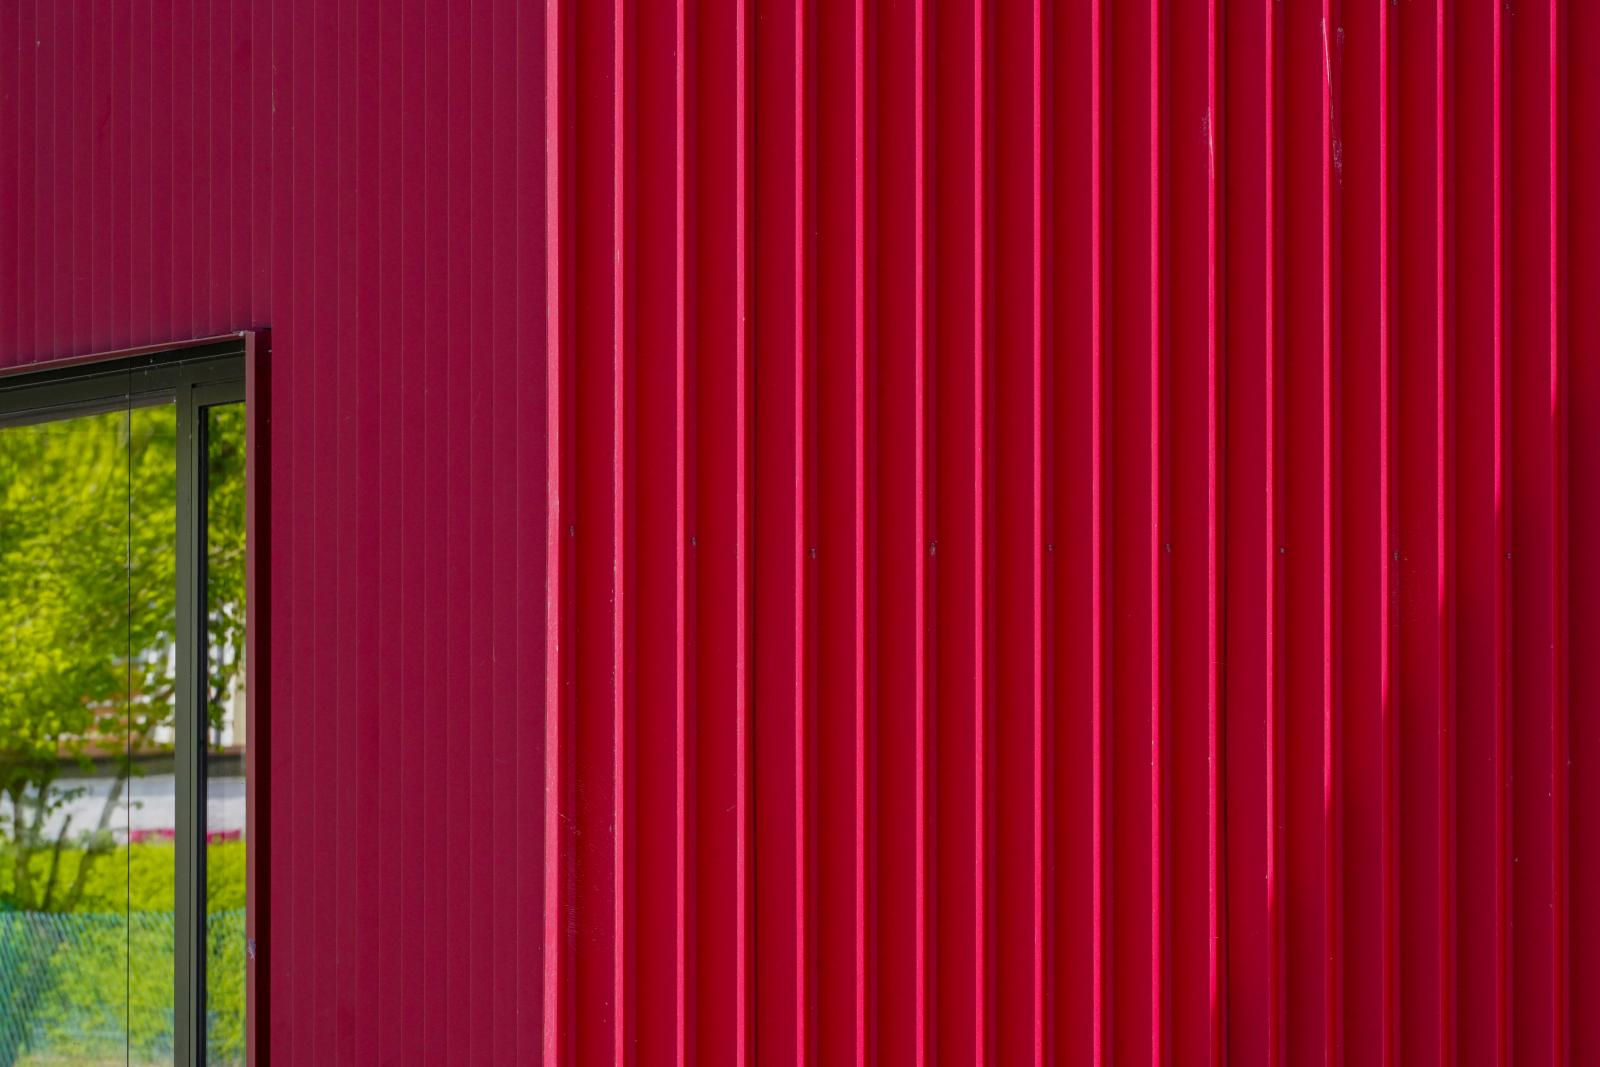 Crimson Rhythms: Vibrant red Palette